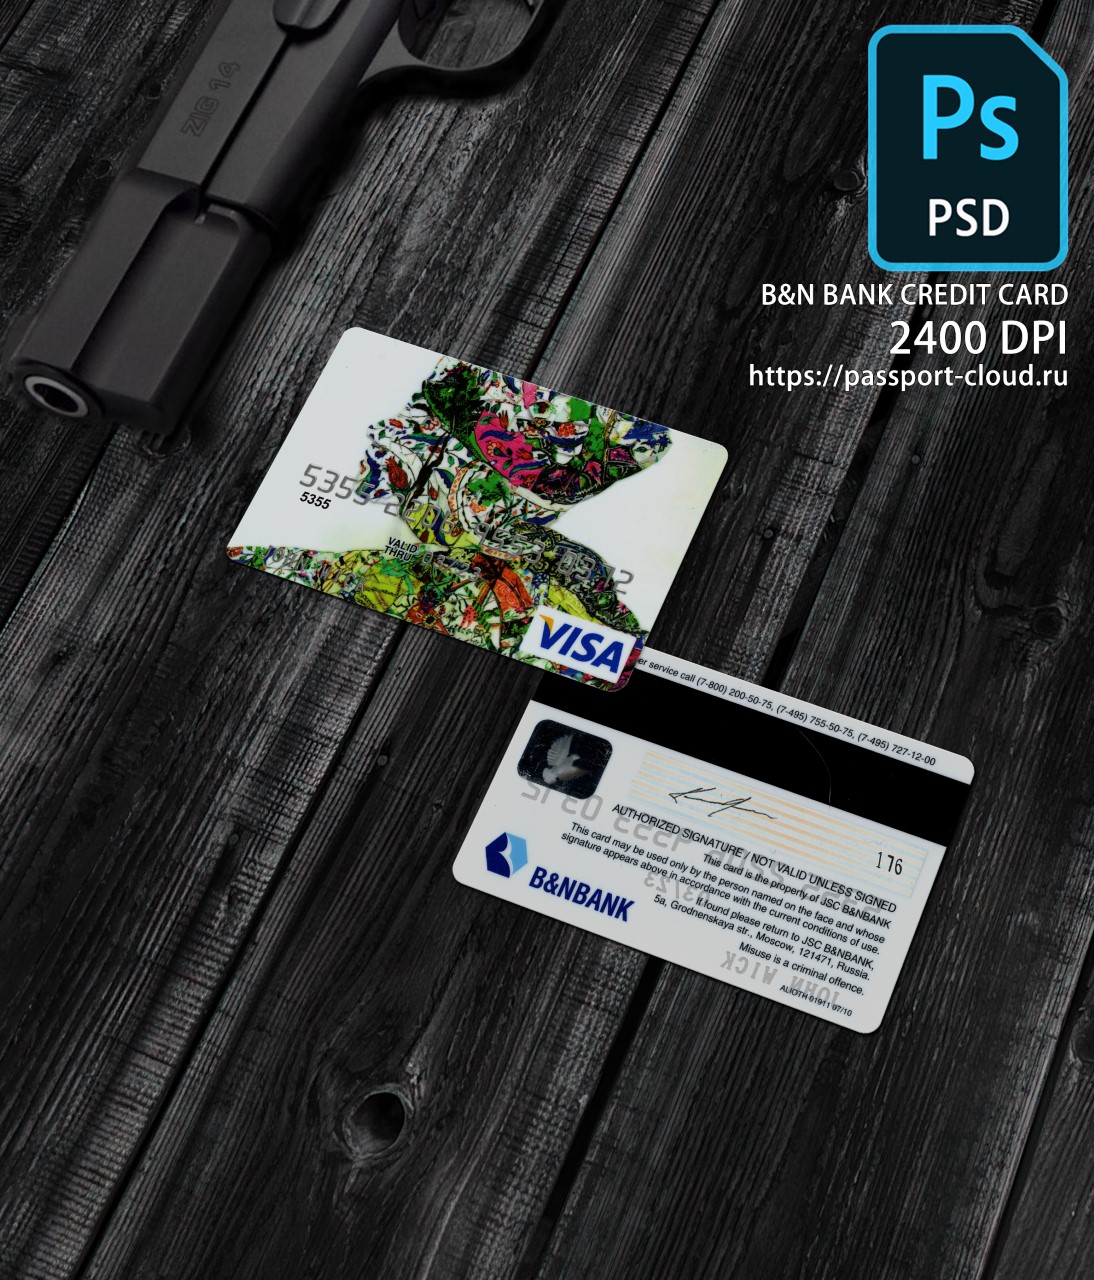 B&N Bank Credit Card PSD-0